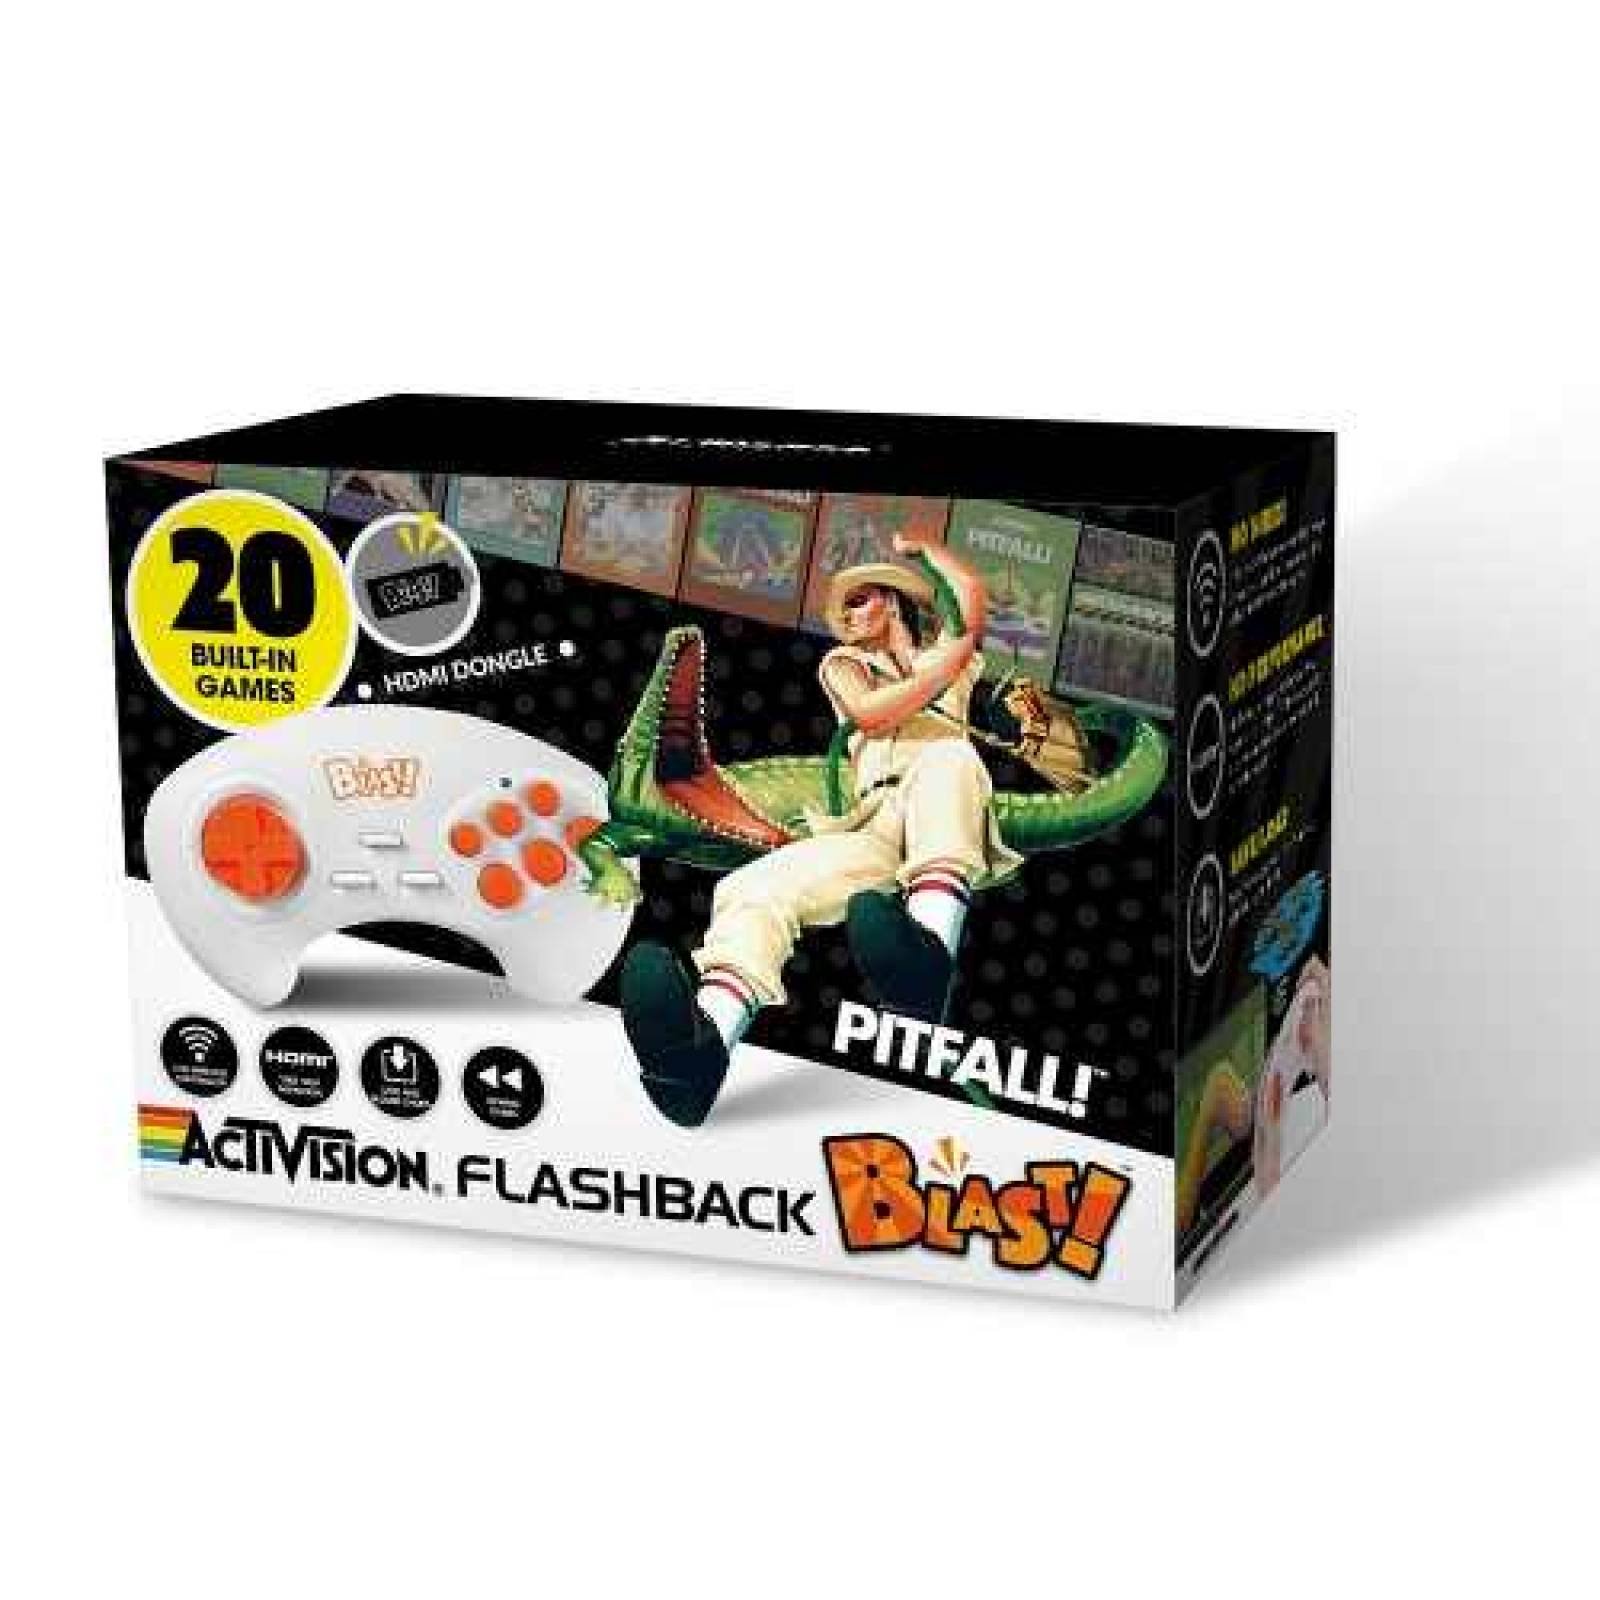 Consola Portable Activision Flashback Blast 20 Juegos